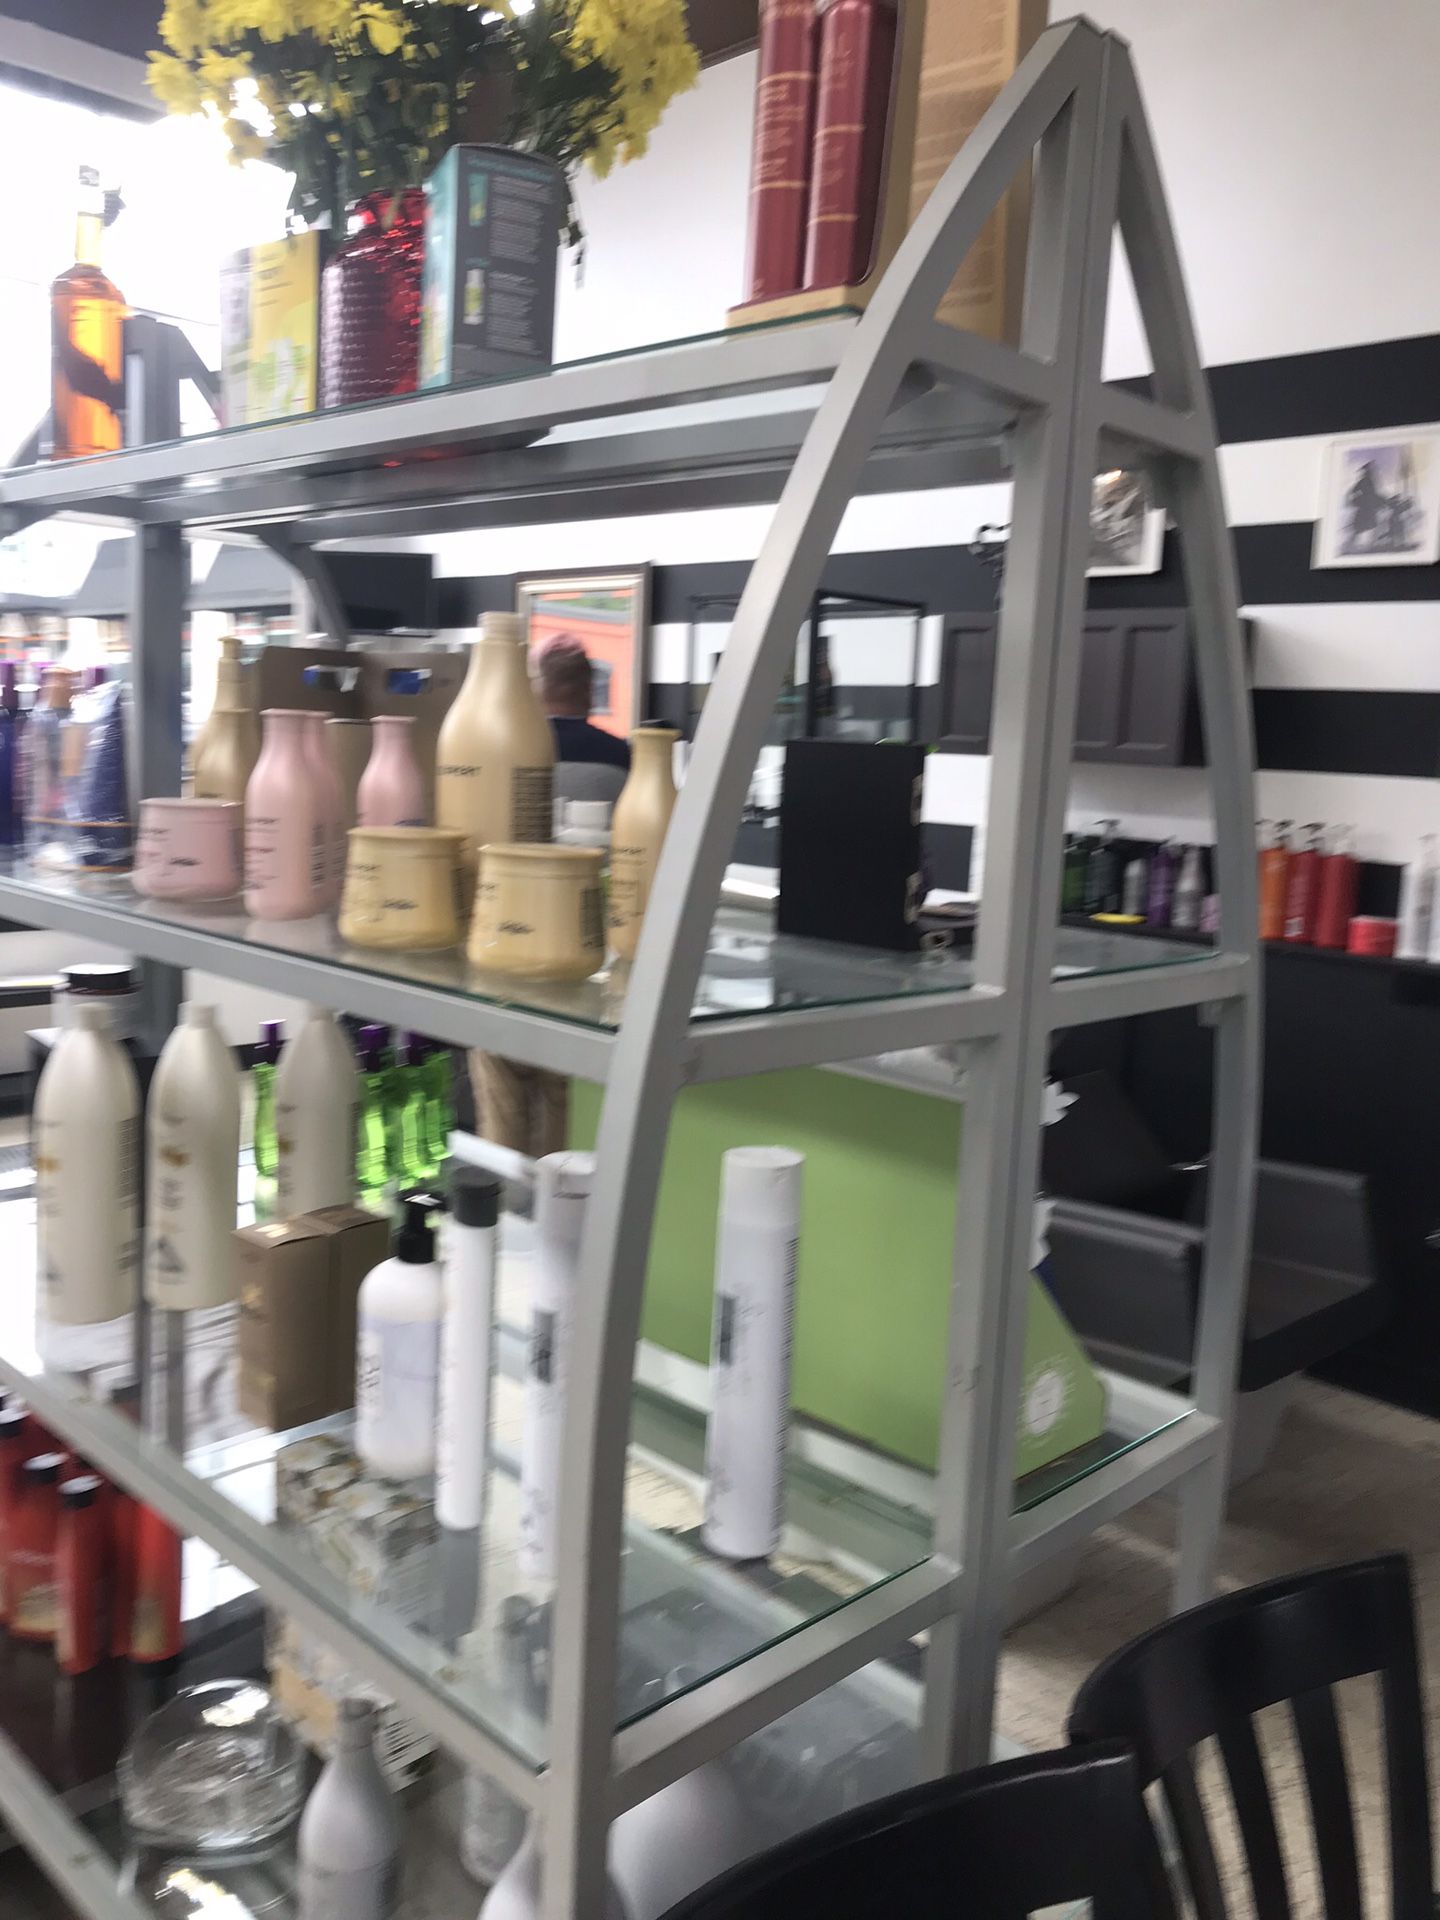 Salon product shelves